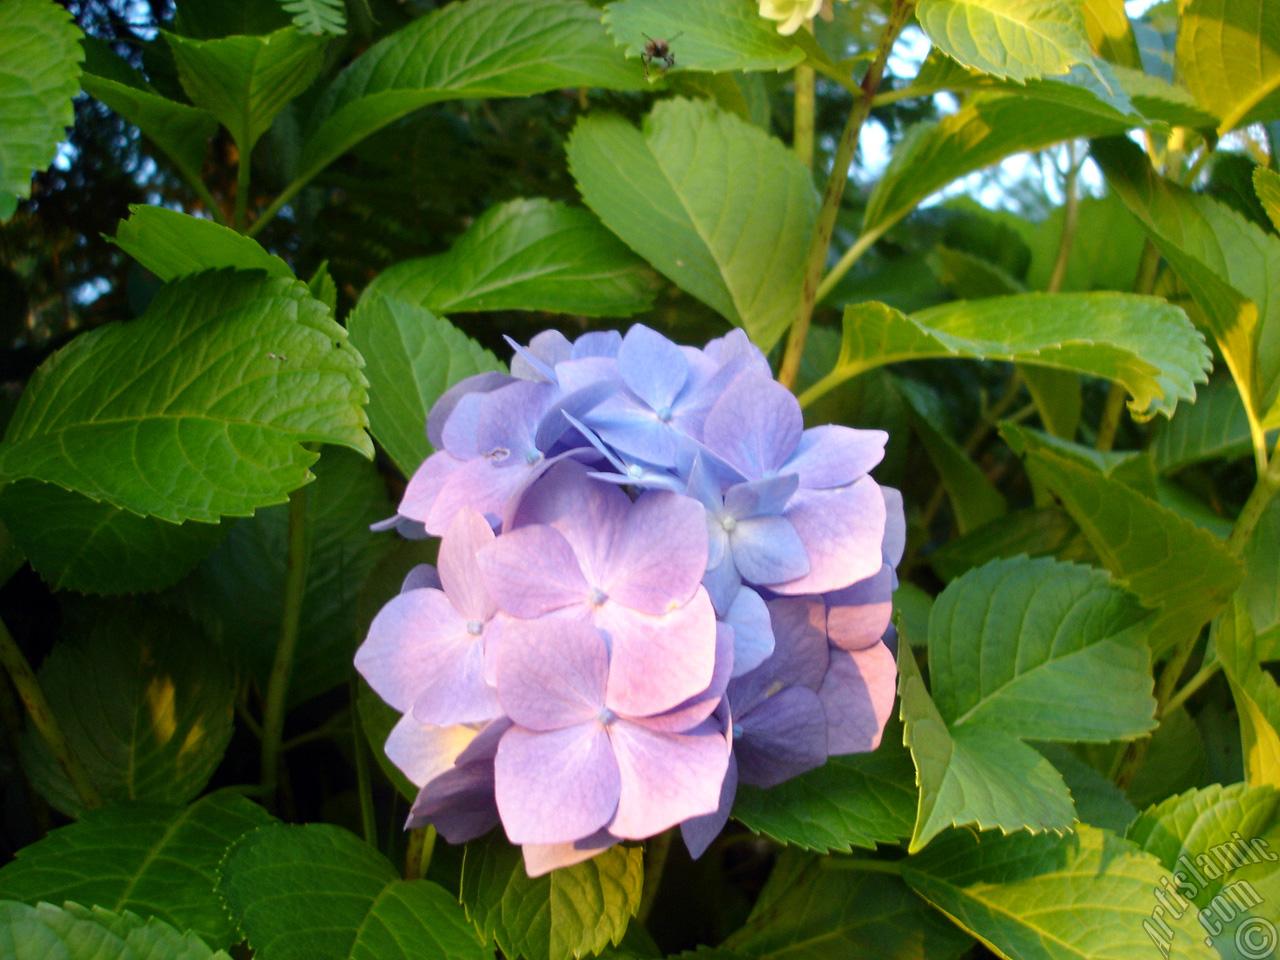 Light blue color Hydrangea -Hortensia- flower.
